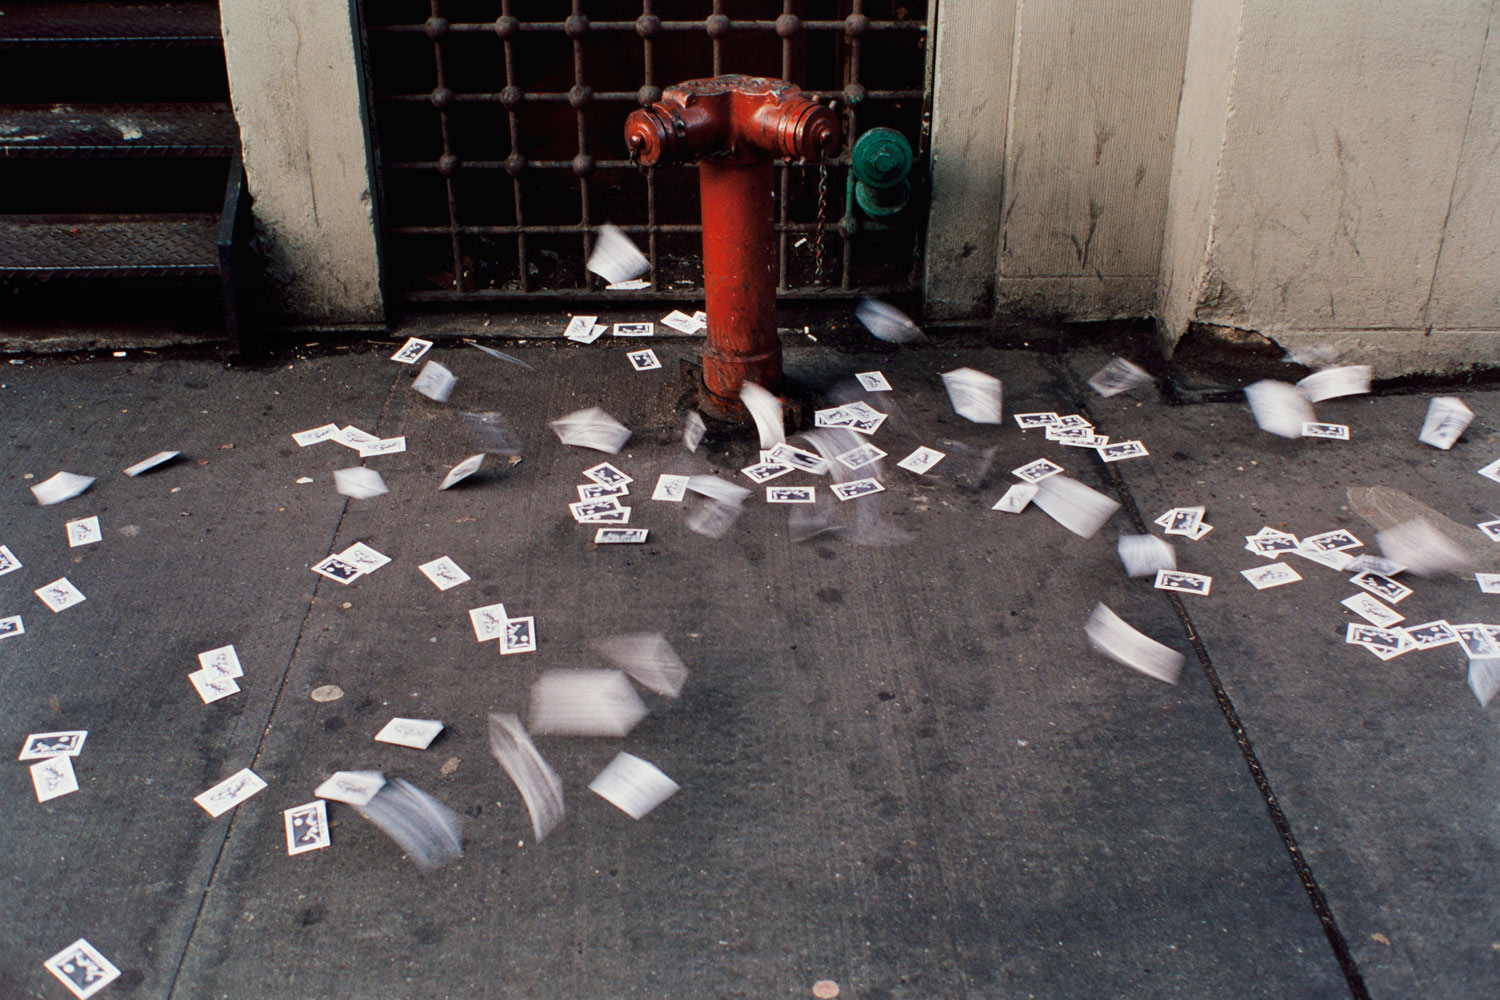 New York City, c. 1993-1997. Fire hydrant